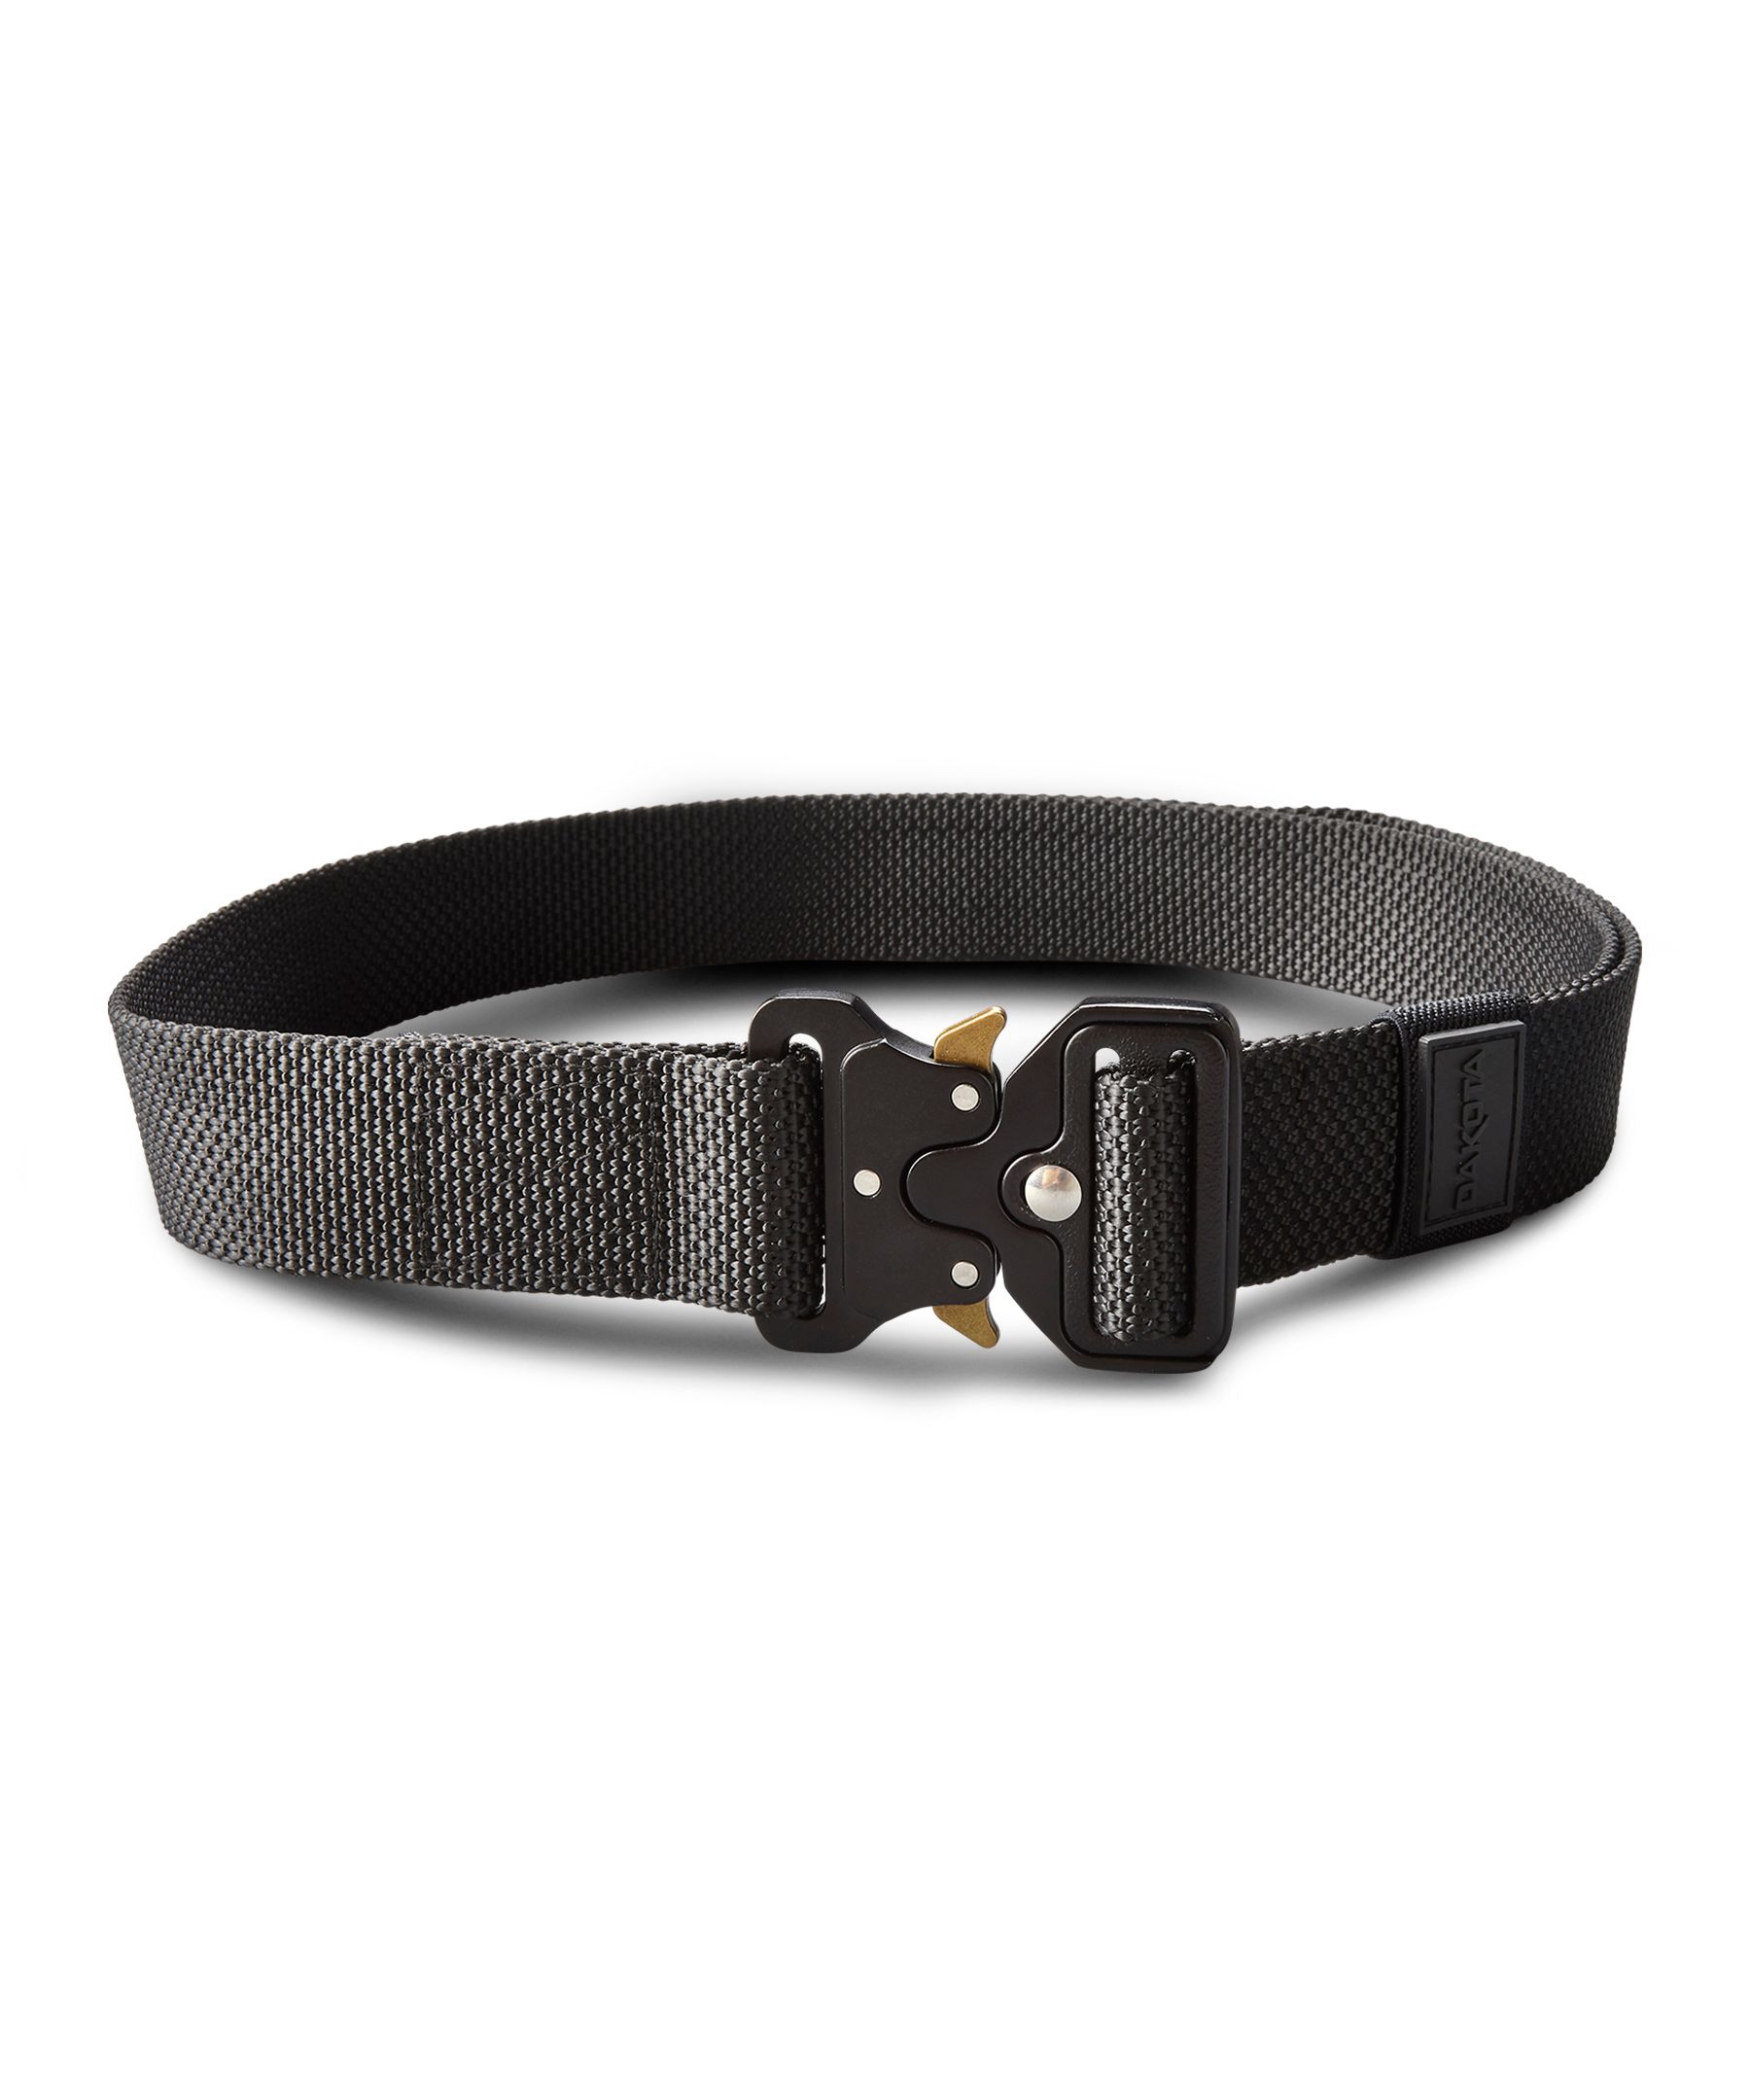 https://media-www.marks.com/product/mens-accessories/belts/fabric/410027780937/dakota-clip-buckle-belt-black-s-m--acd3545a-9d27-482f-a243-e8b7e5dc6bbd-jpgrendition.jpg